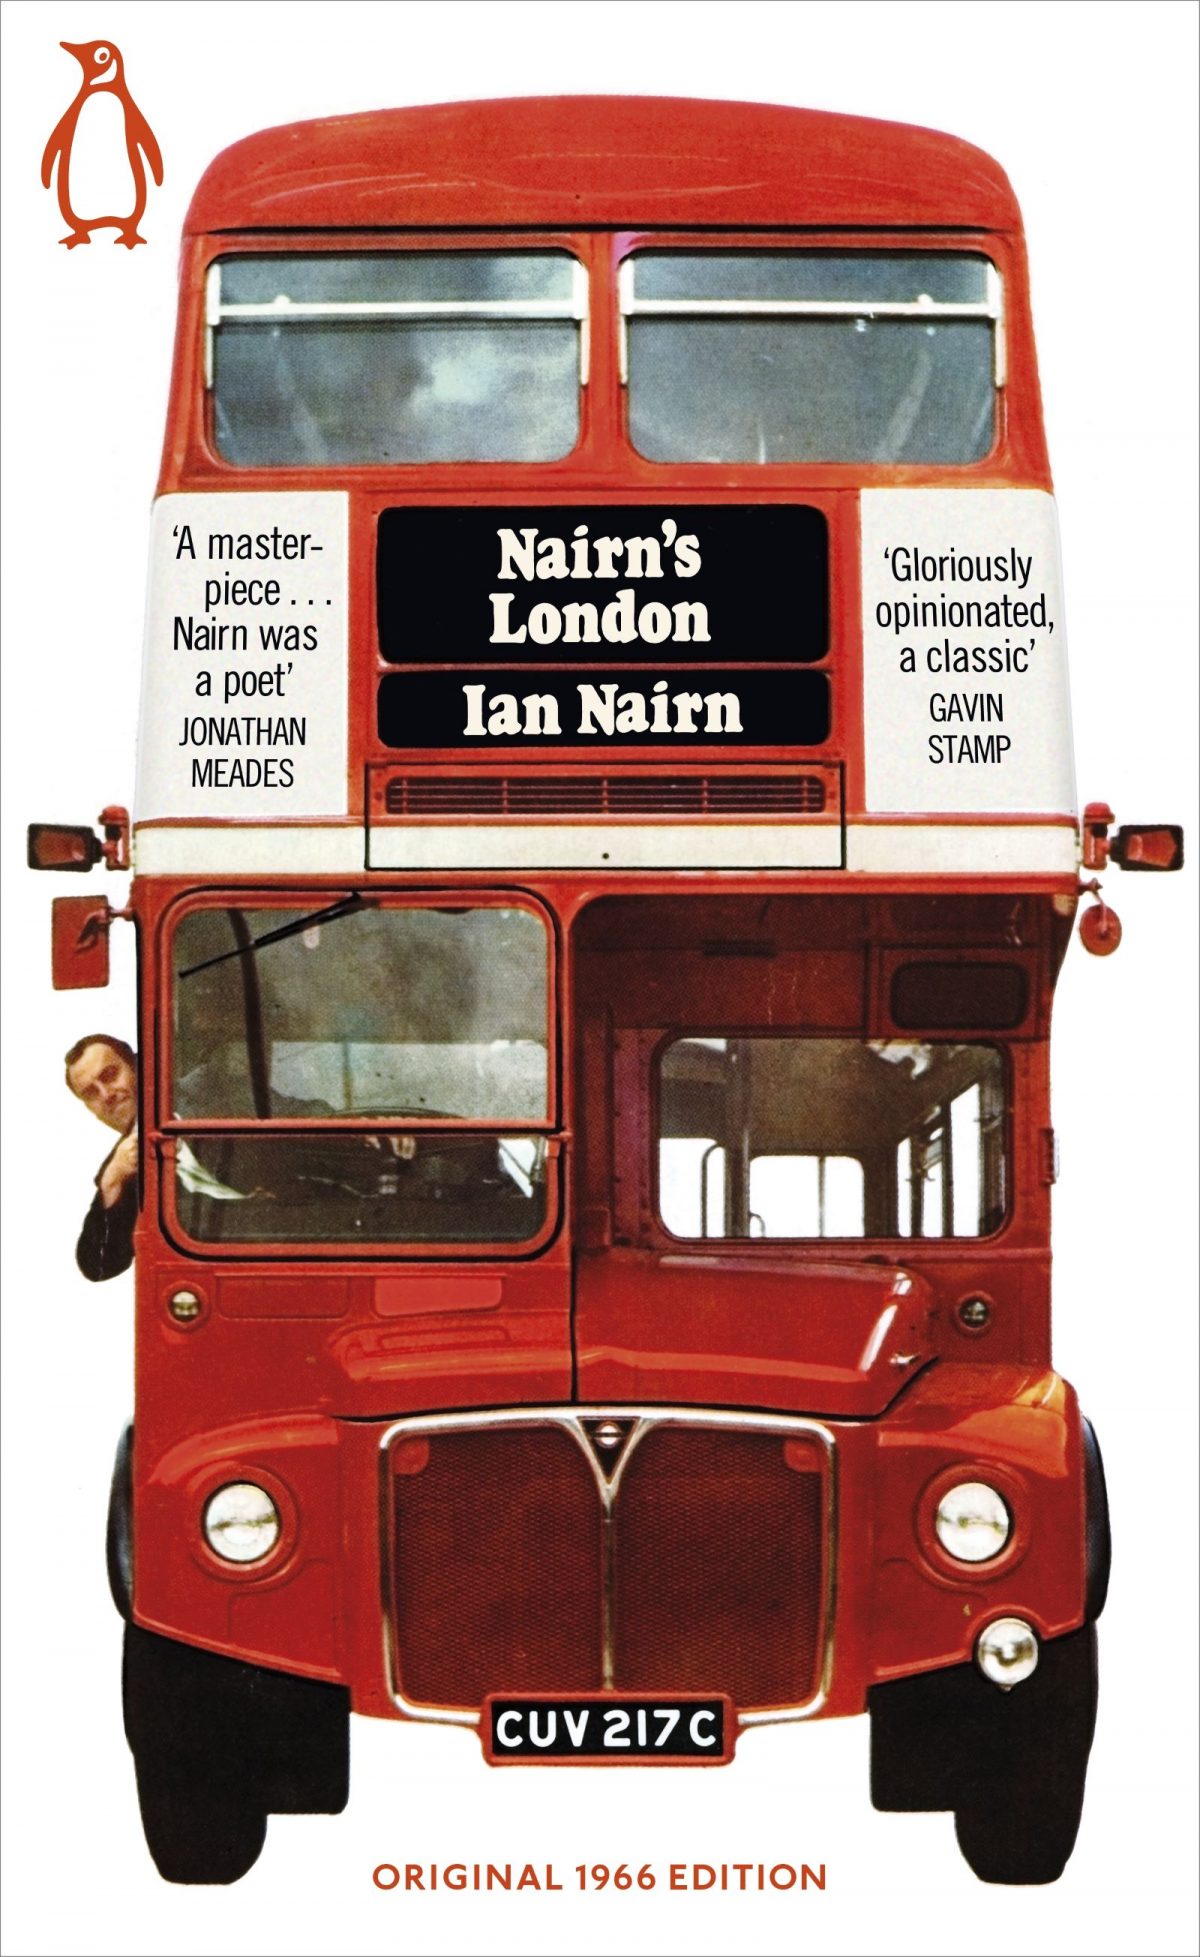 Dennis Rolfe, books, designs, book covers, Nairn's London, Penguin Books